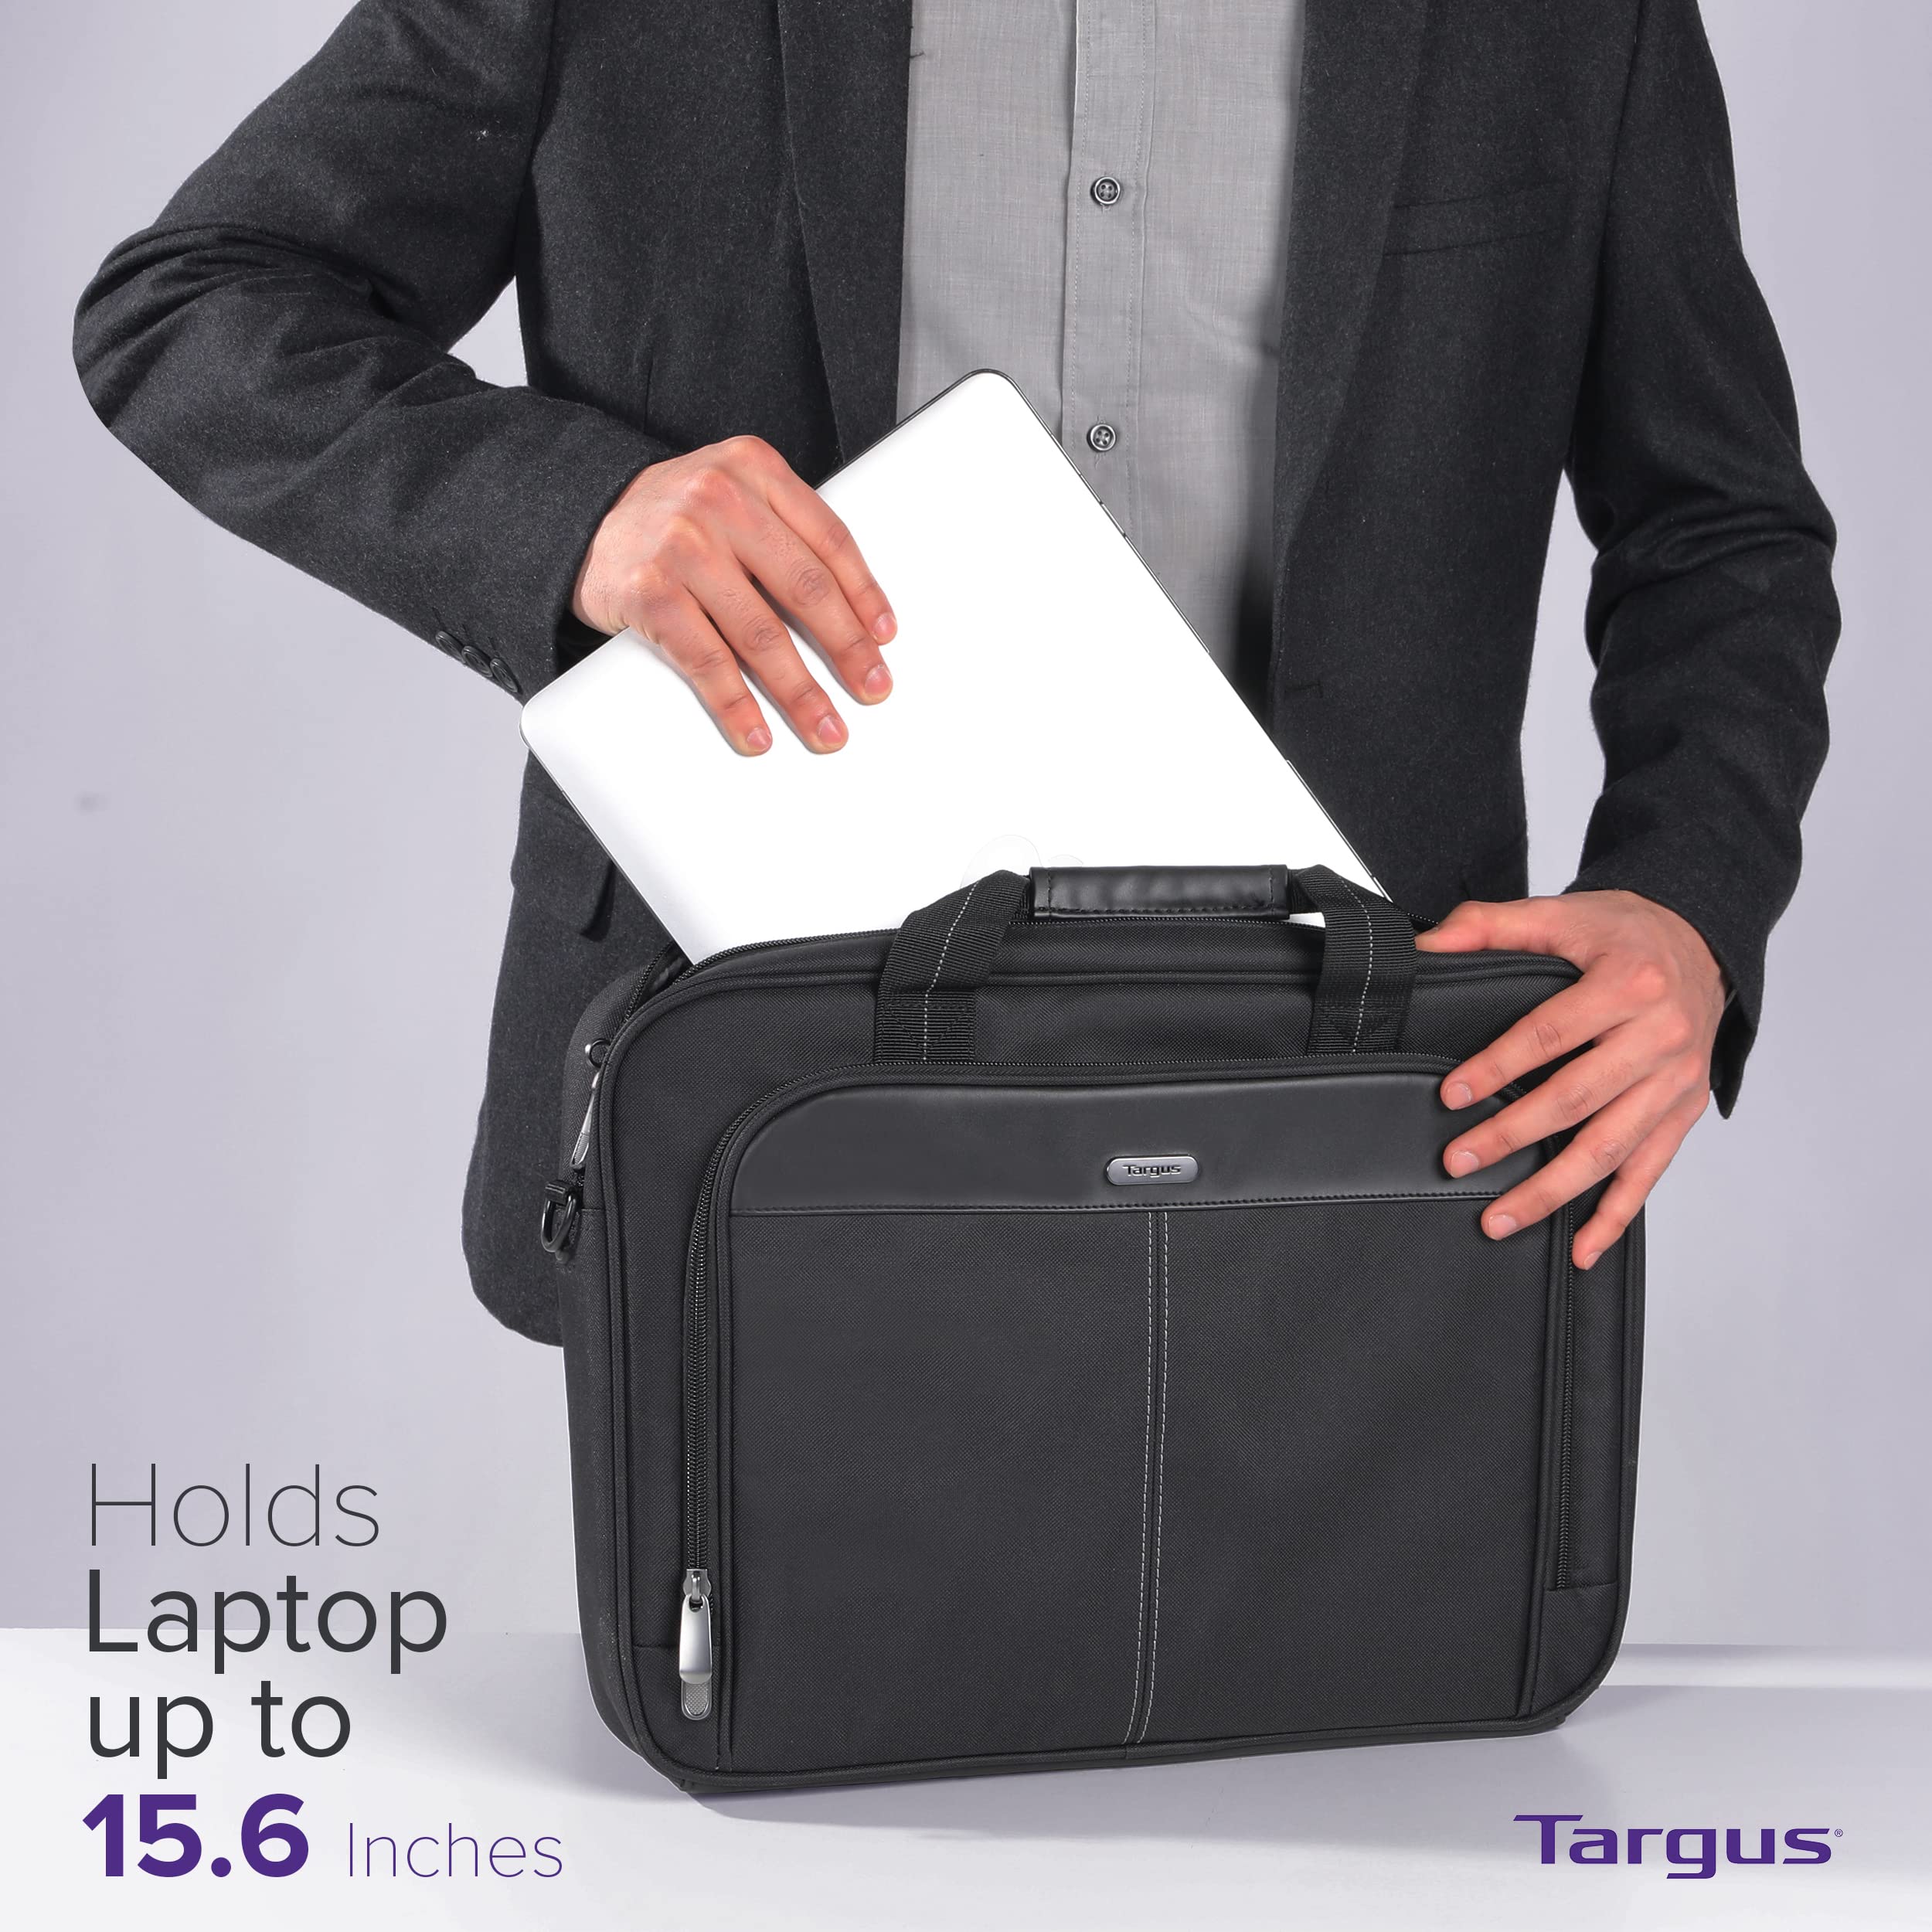 Targus Laptop Bag Classic Slim Briefcase Messenger Bag, Spacious, Ergonomic, Foam Padded Laptop Case for Devices